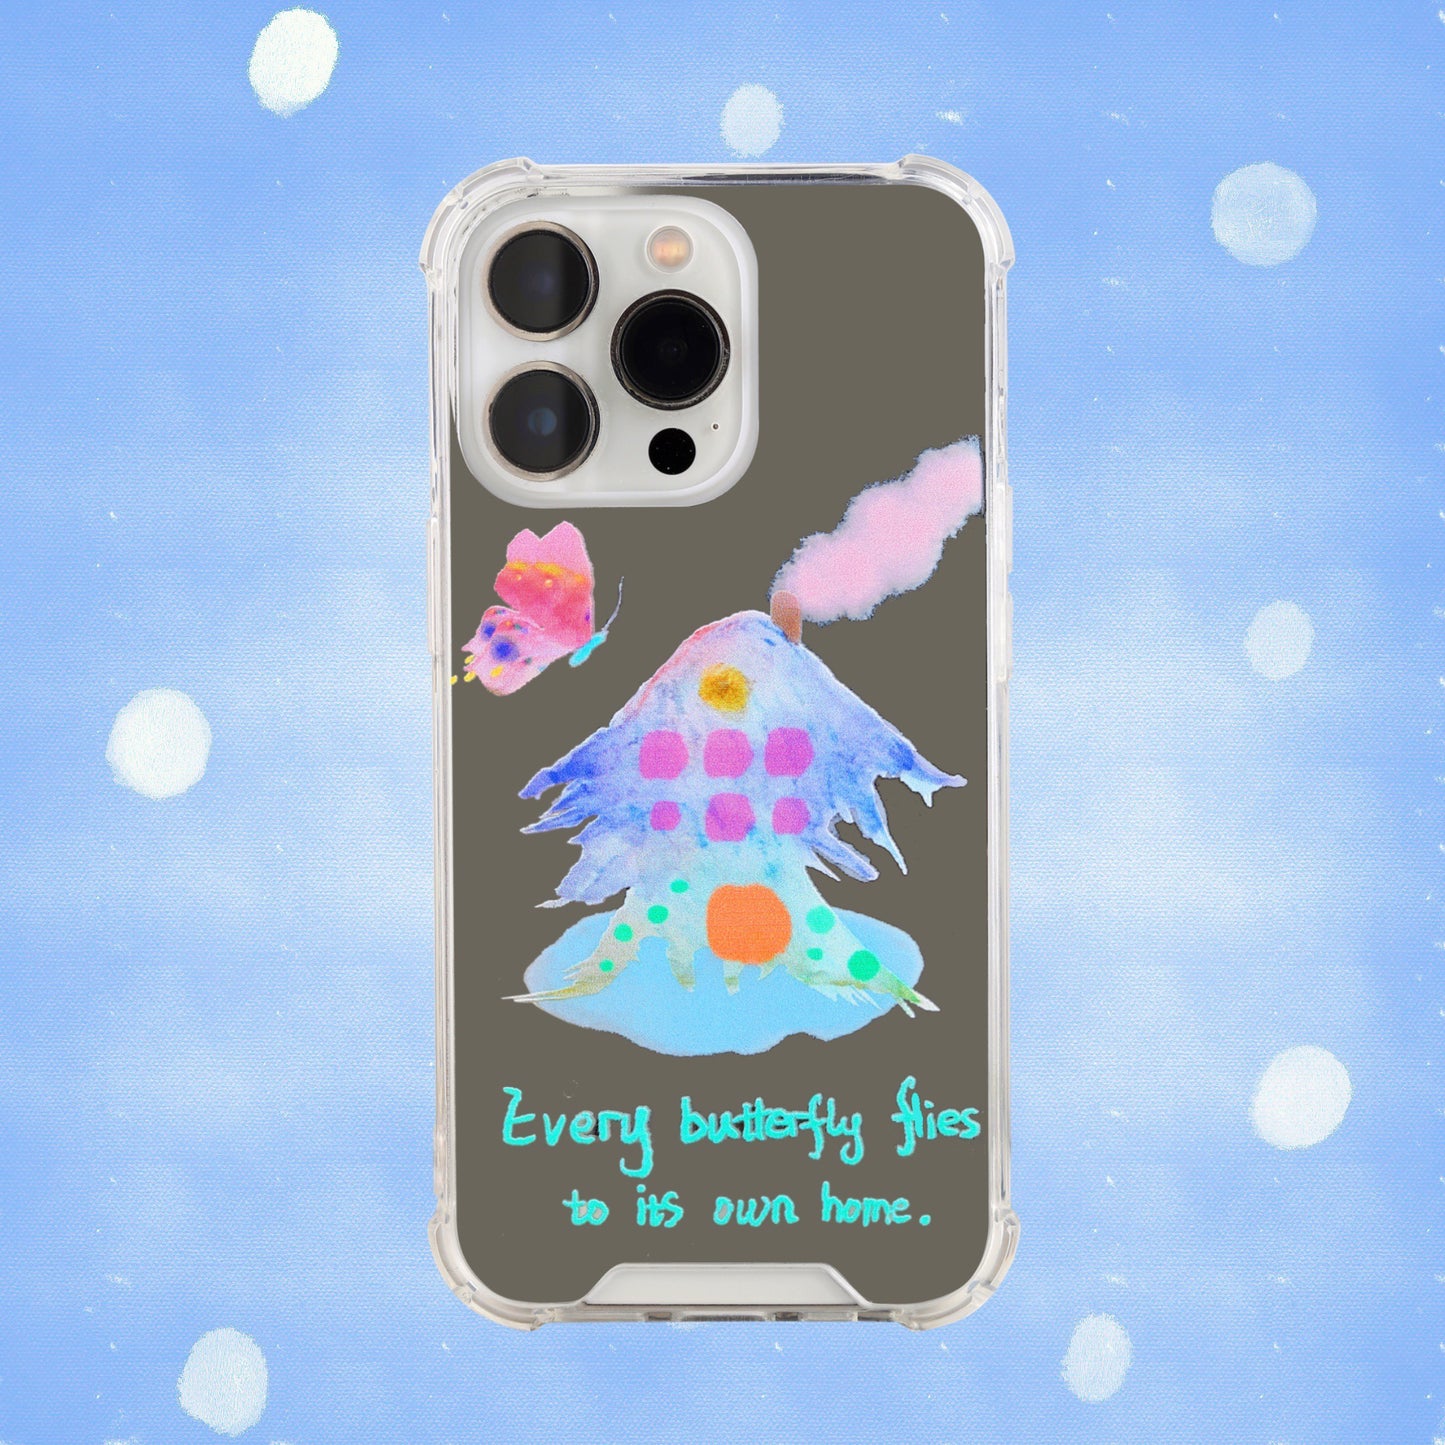 「Original」Go home butterfly mirror phone case